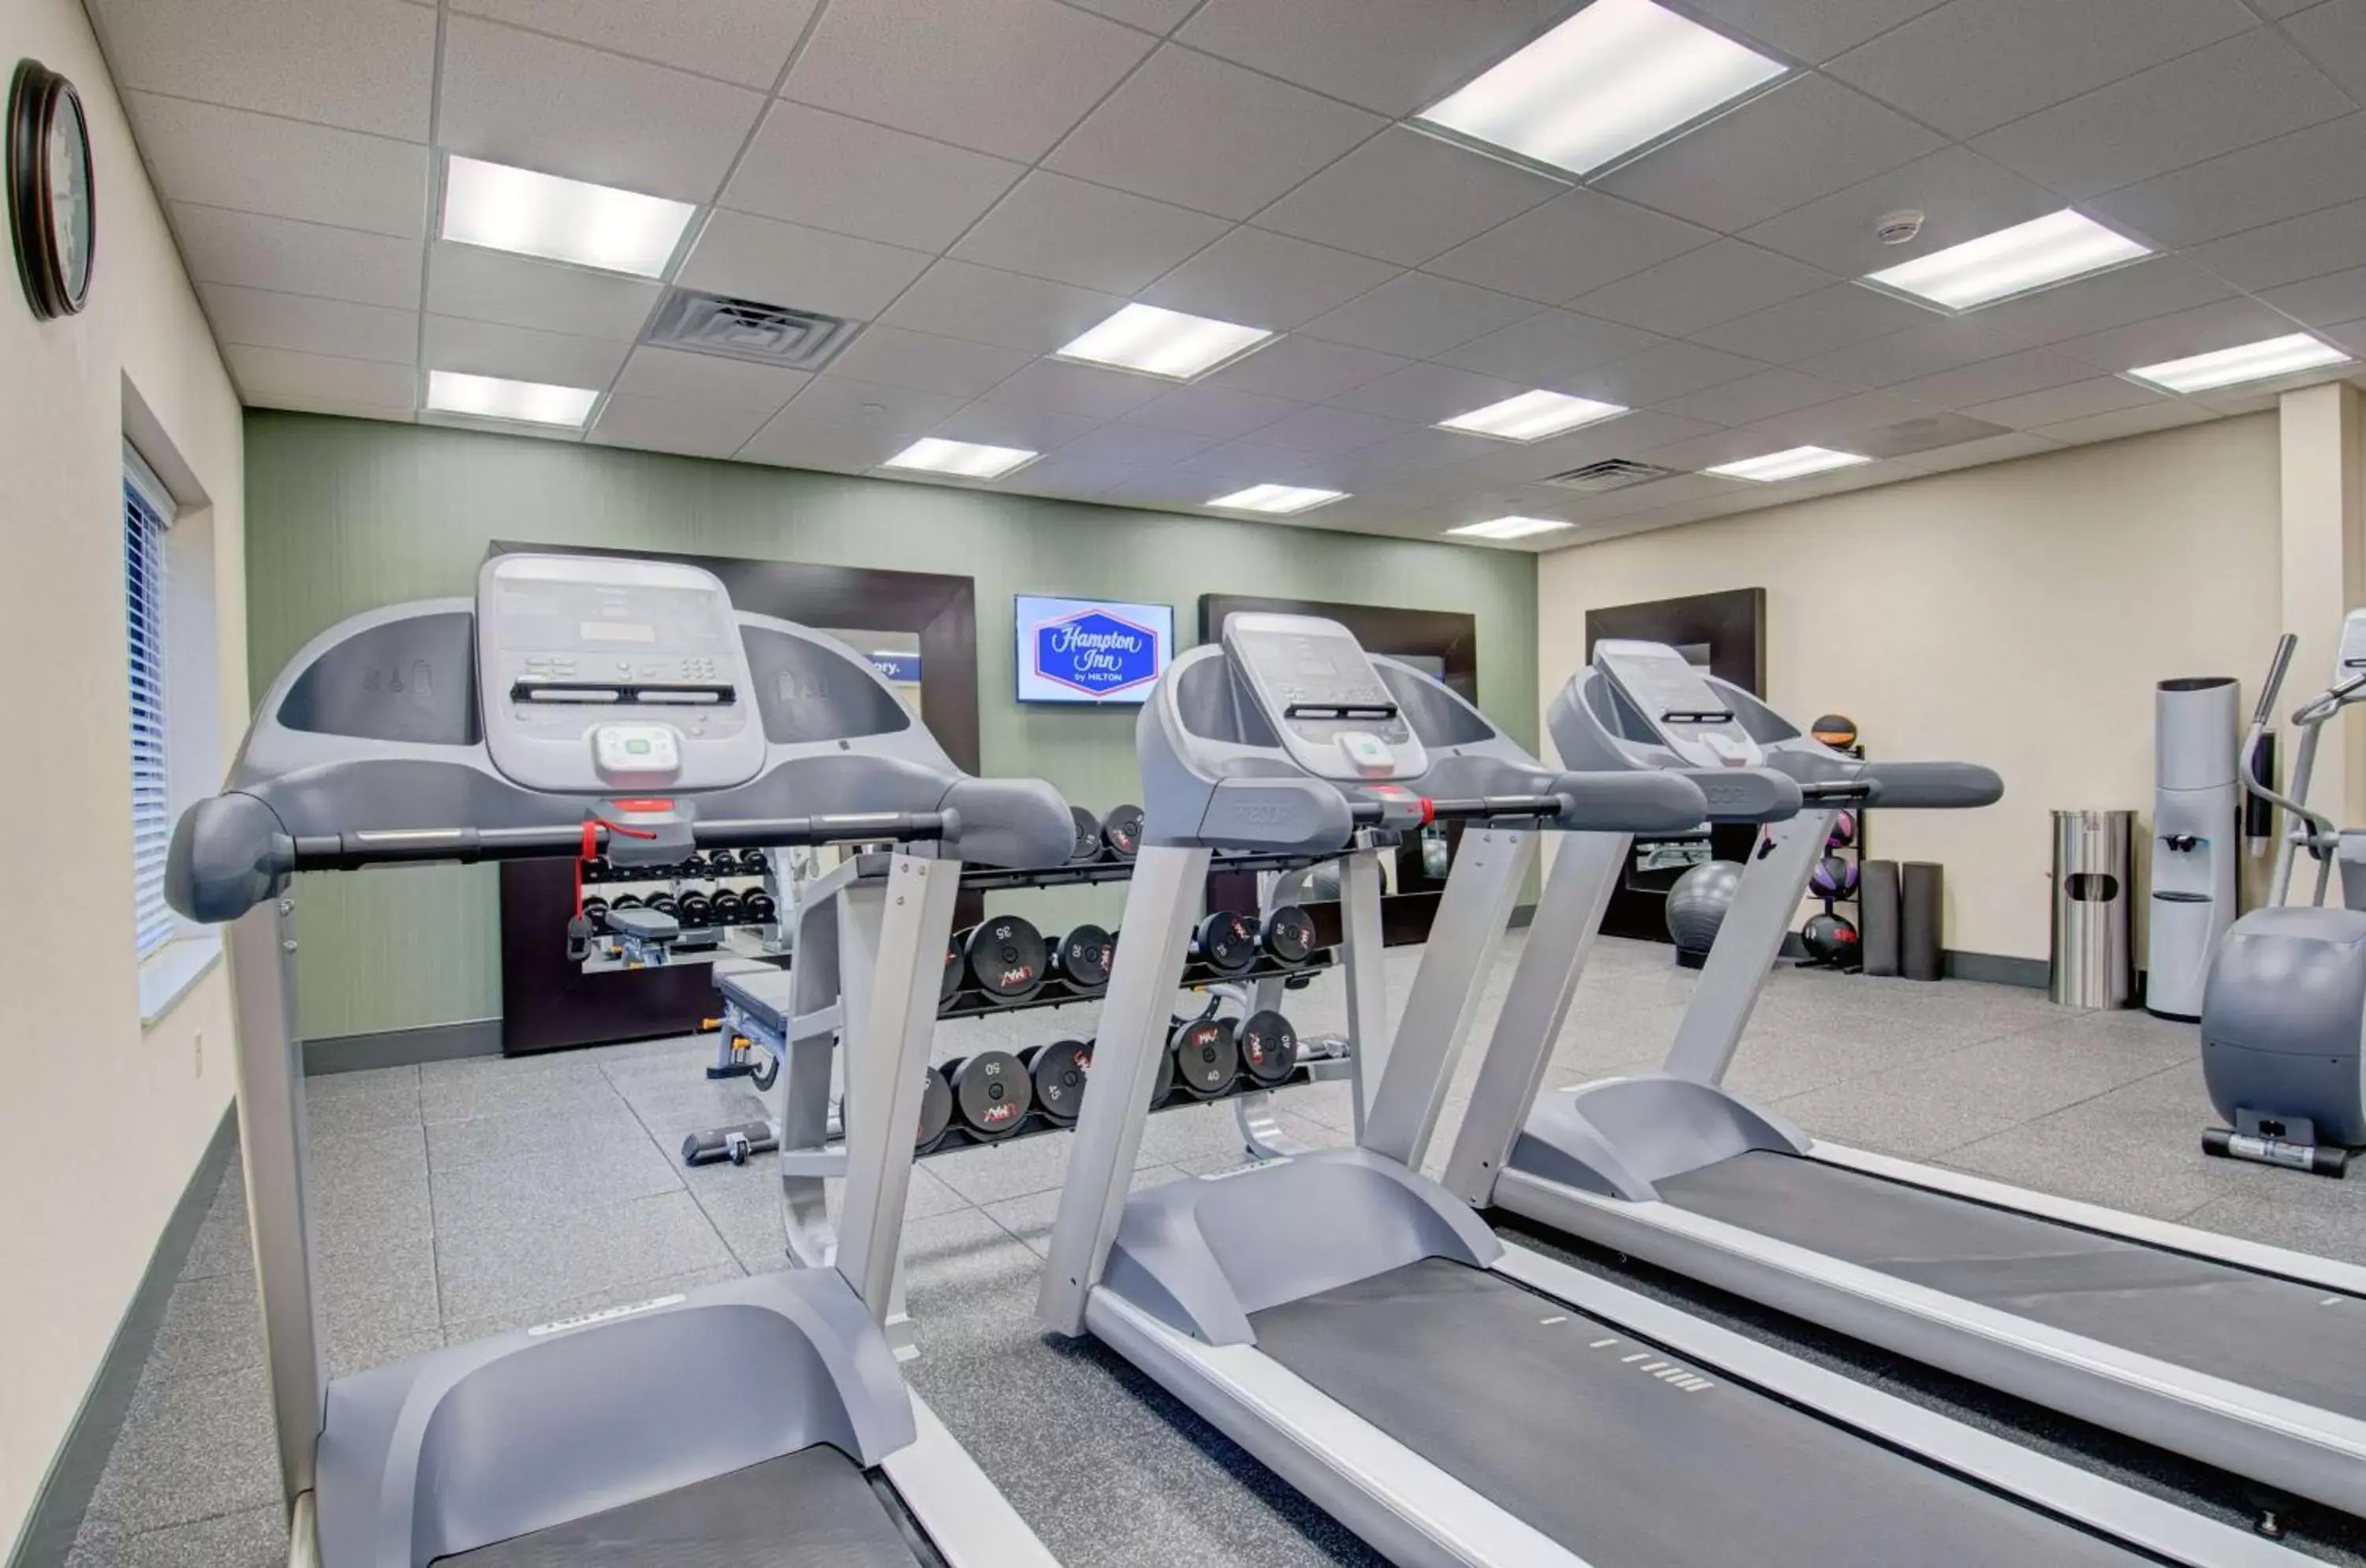 Fitness centre/facilities, Fitness Center/Facilities in Hampton Inn Boston - Westborough